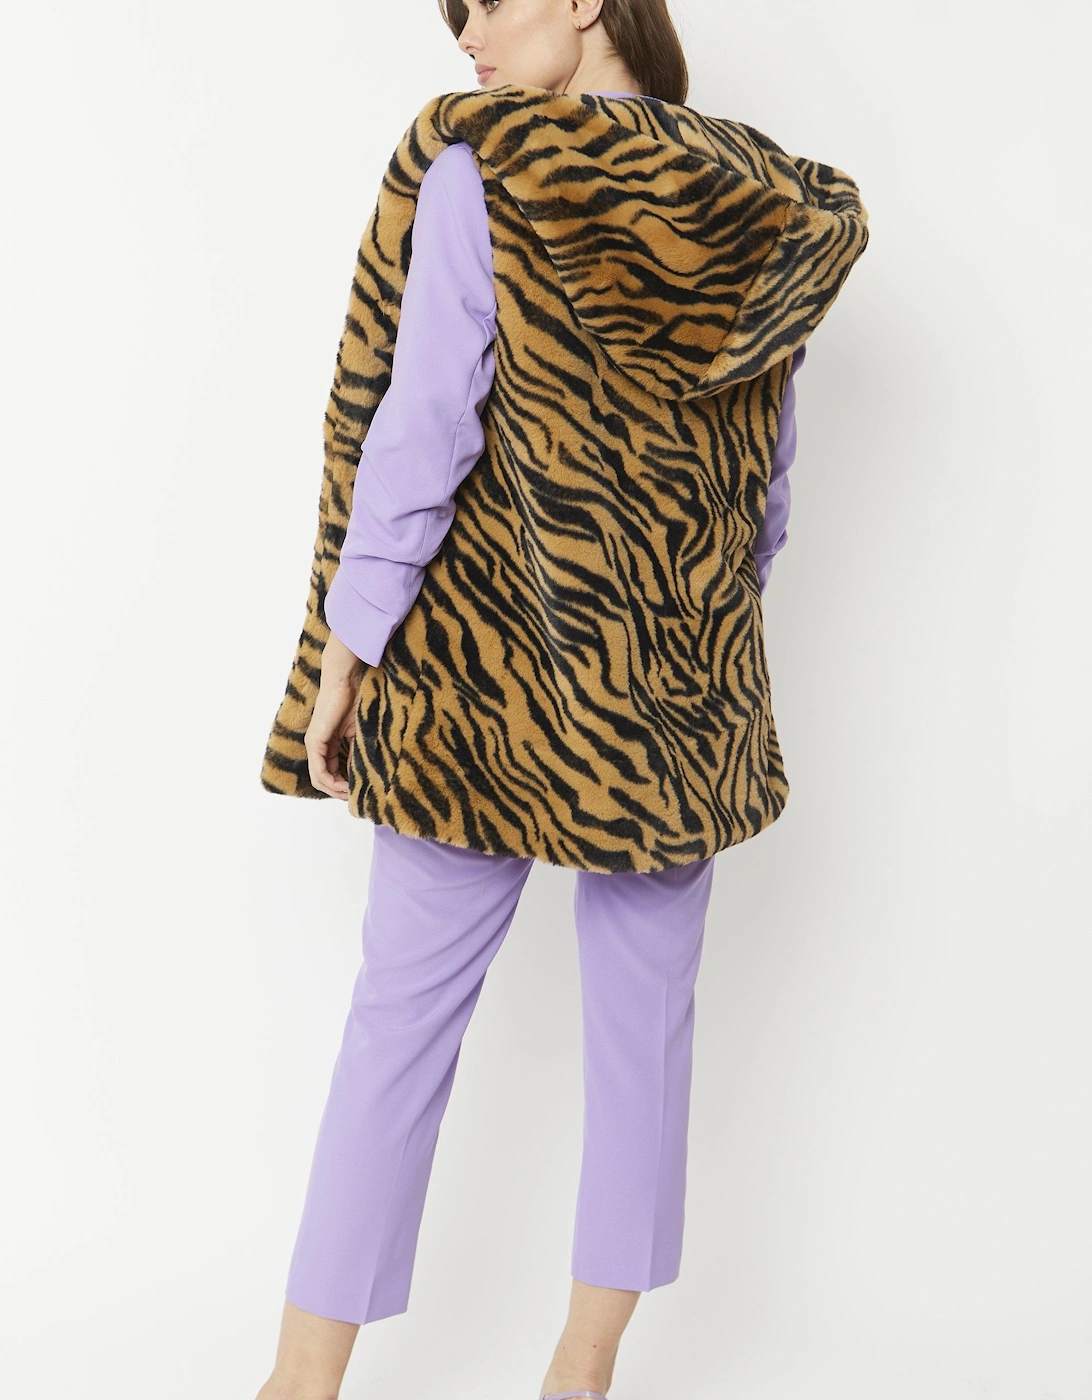 Tiger Print Faux Fur Hooded Gilet